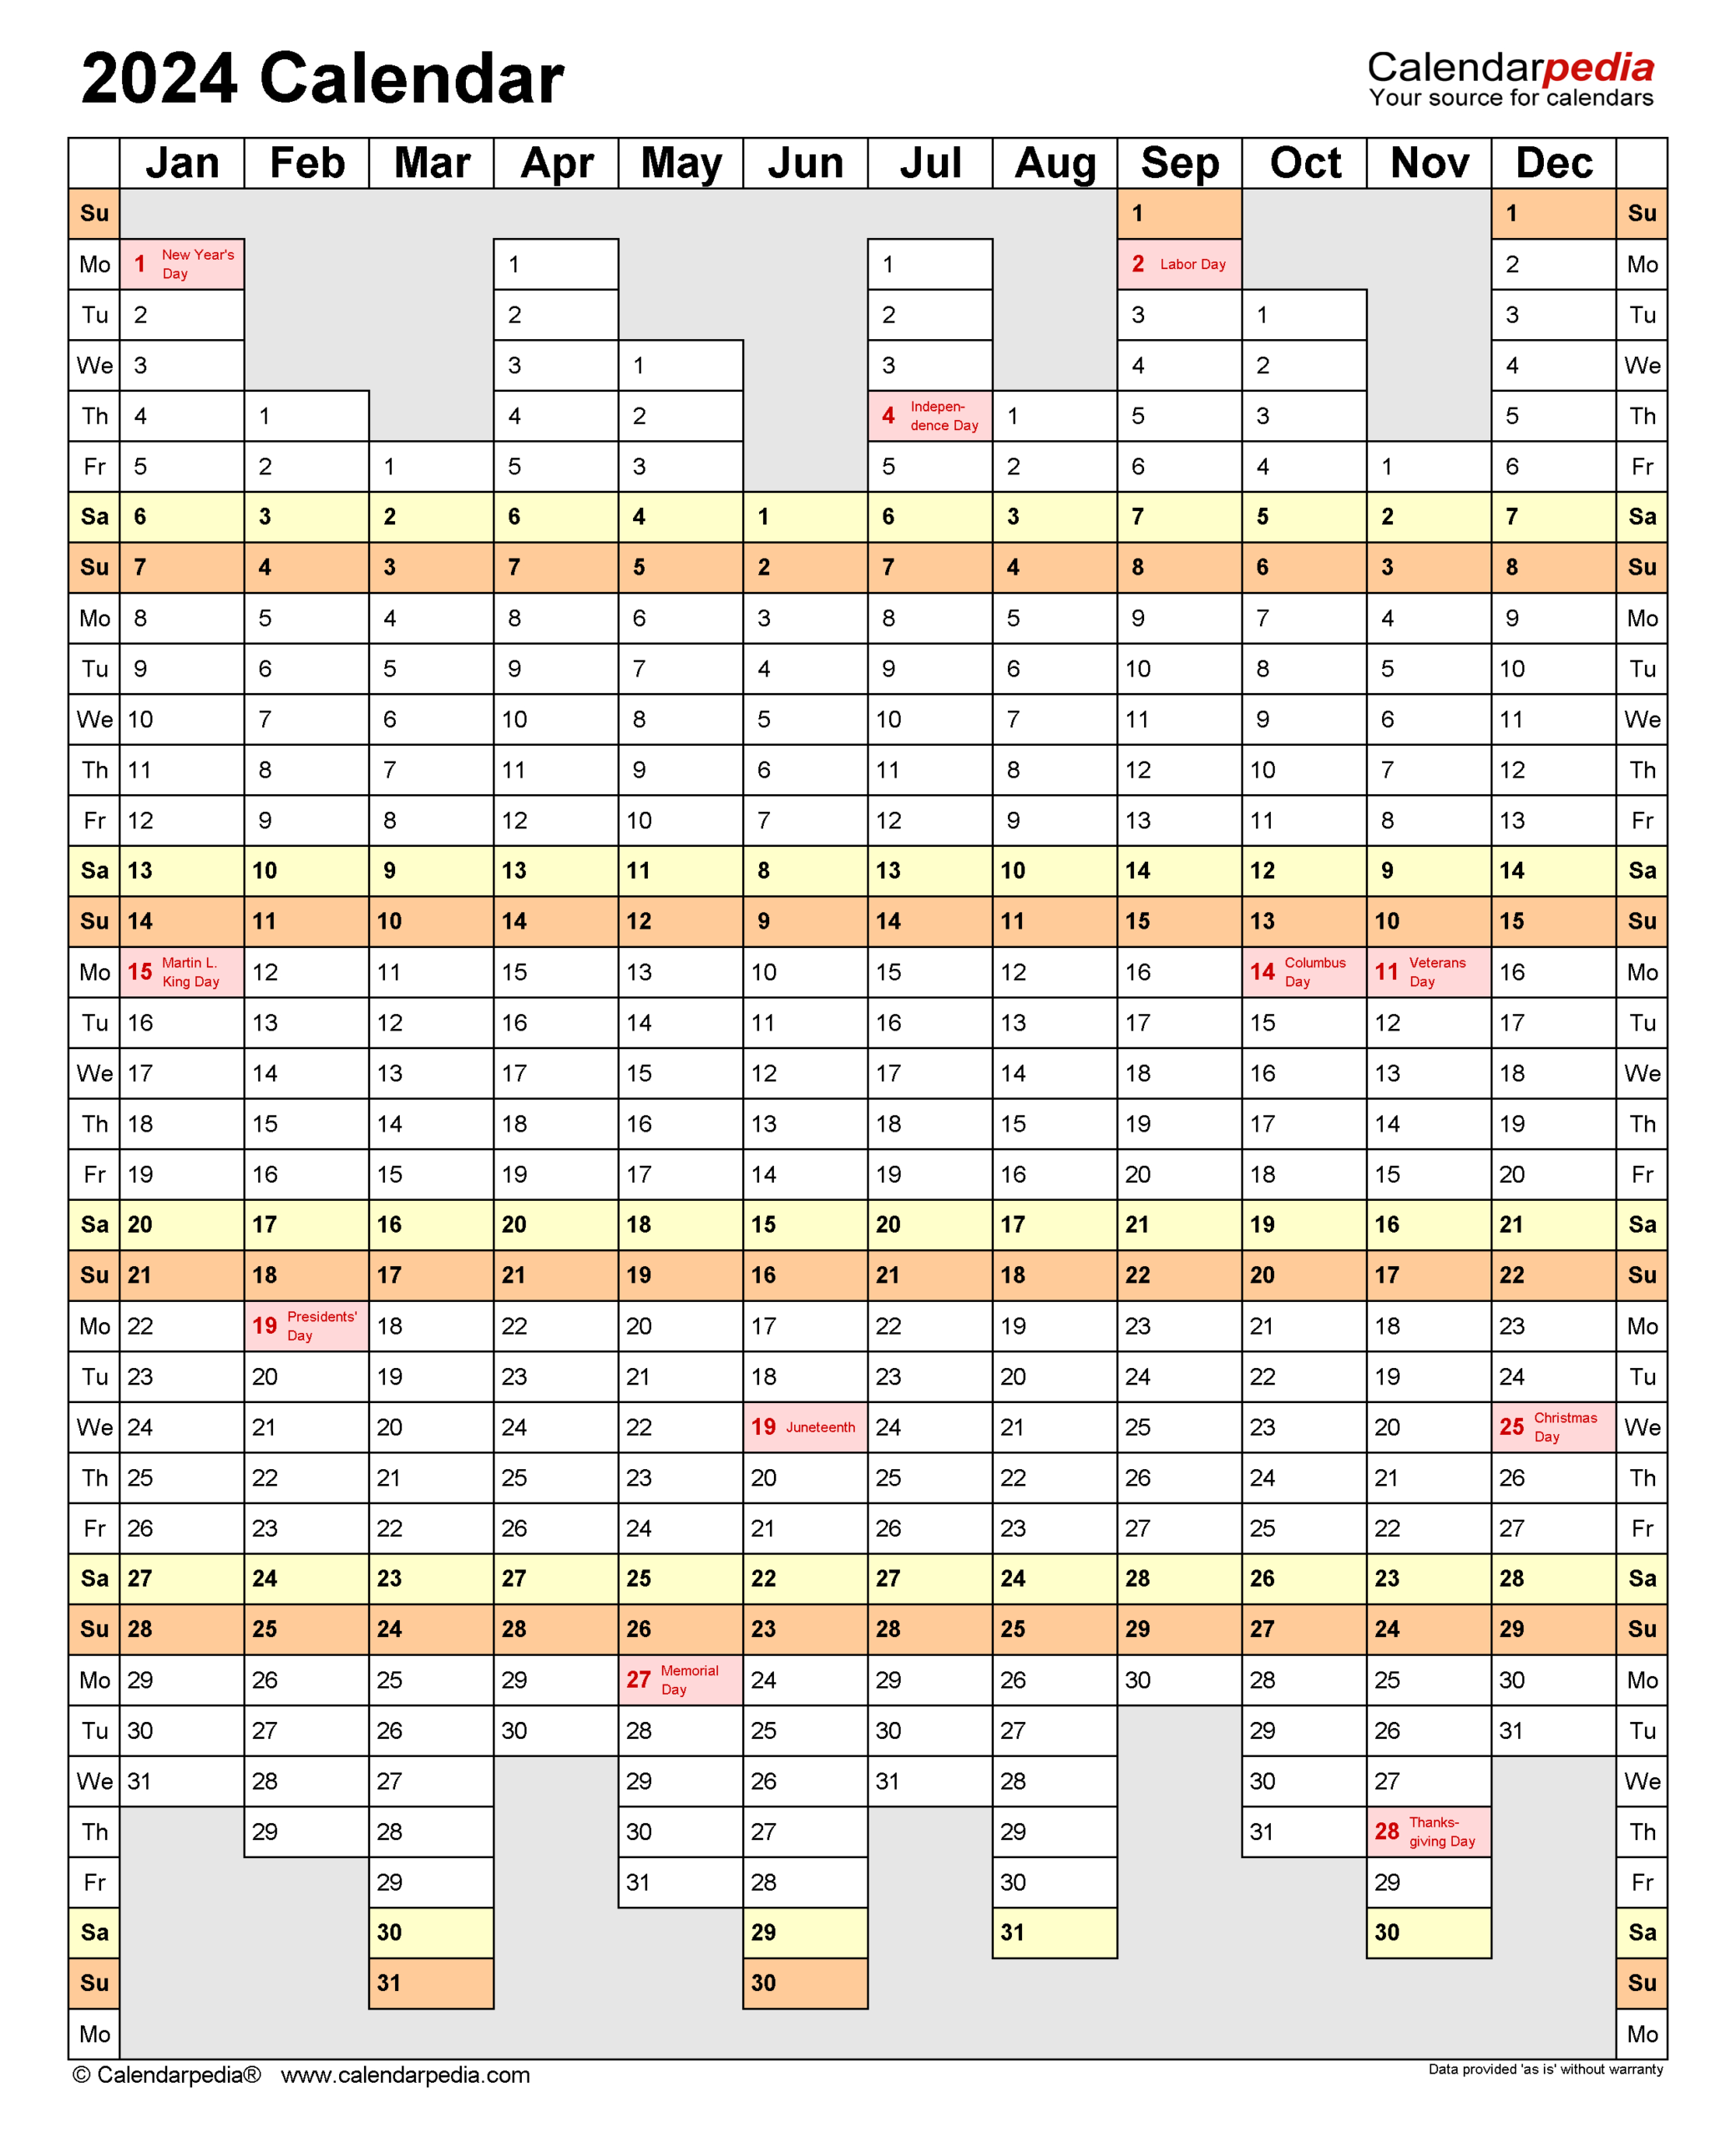 2024 Calendar - Free Printable Excel Templates - Calendarpedia  2022 Calendar Template Excel Free Download